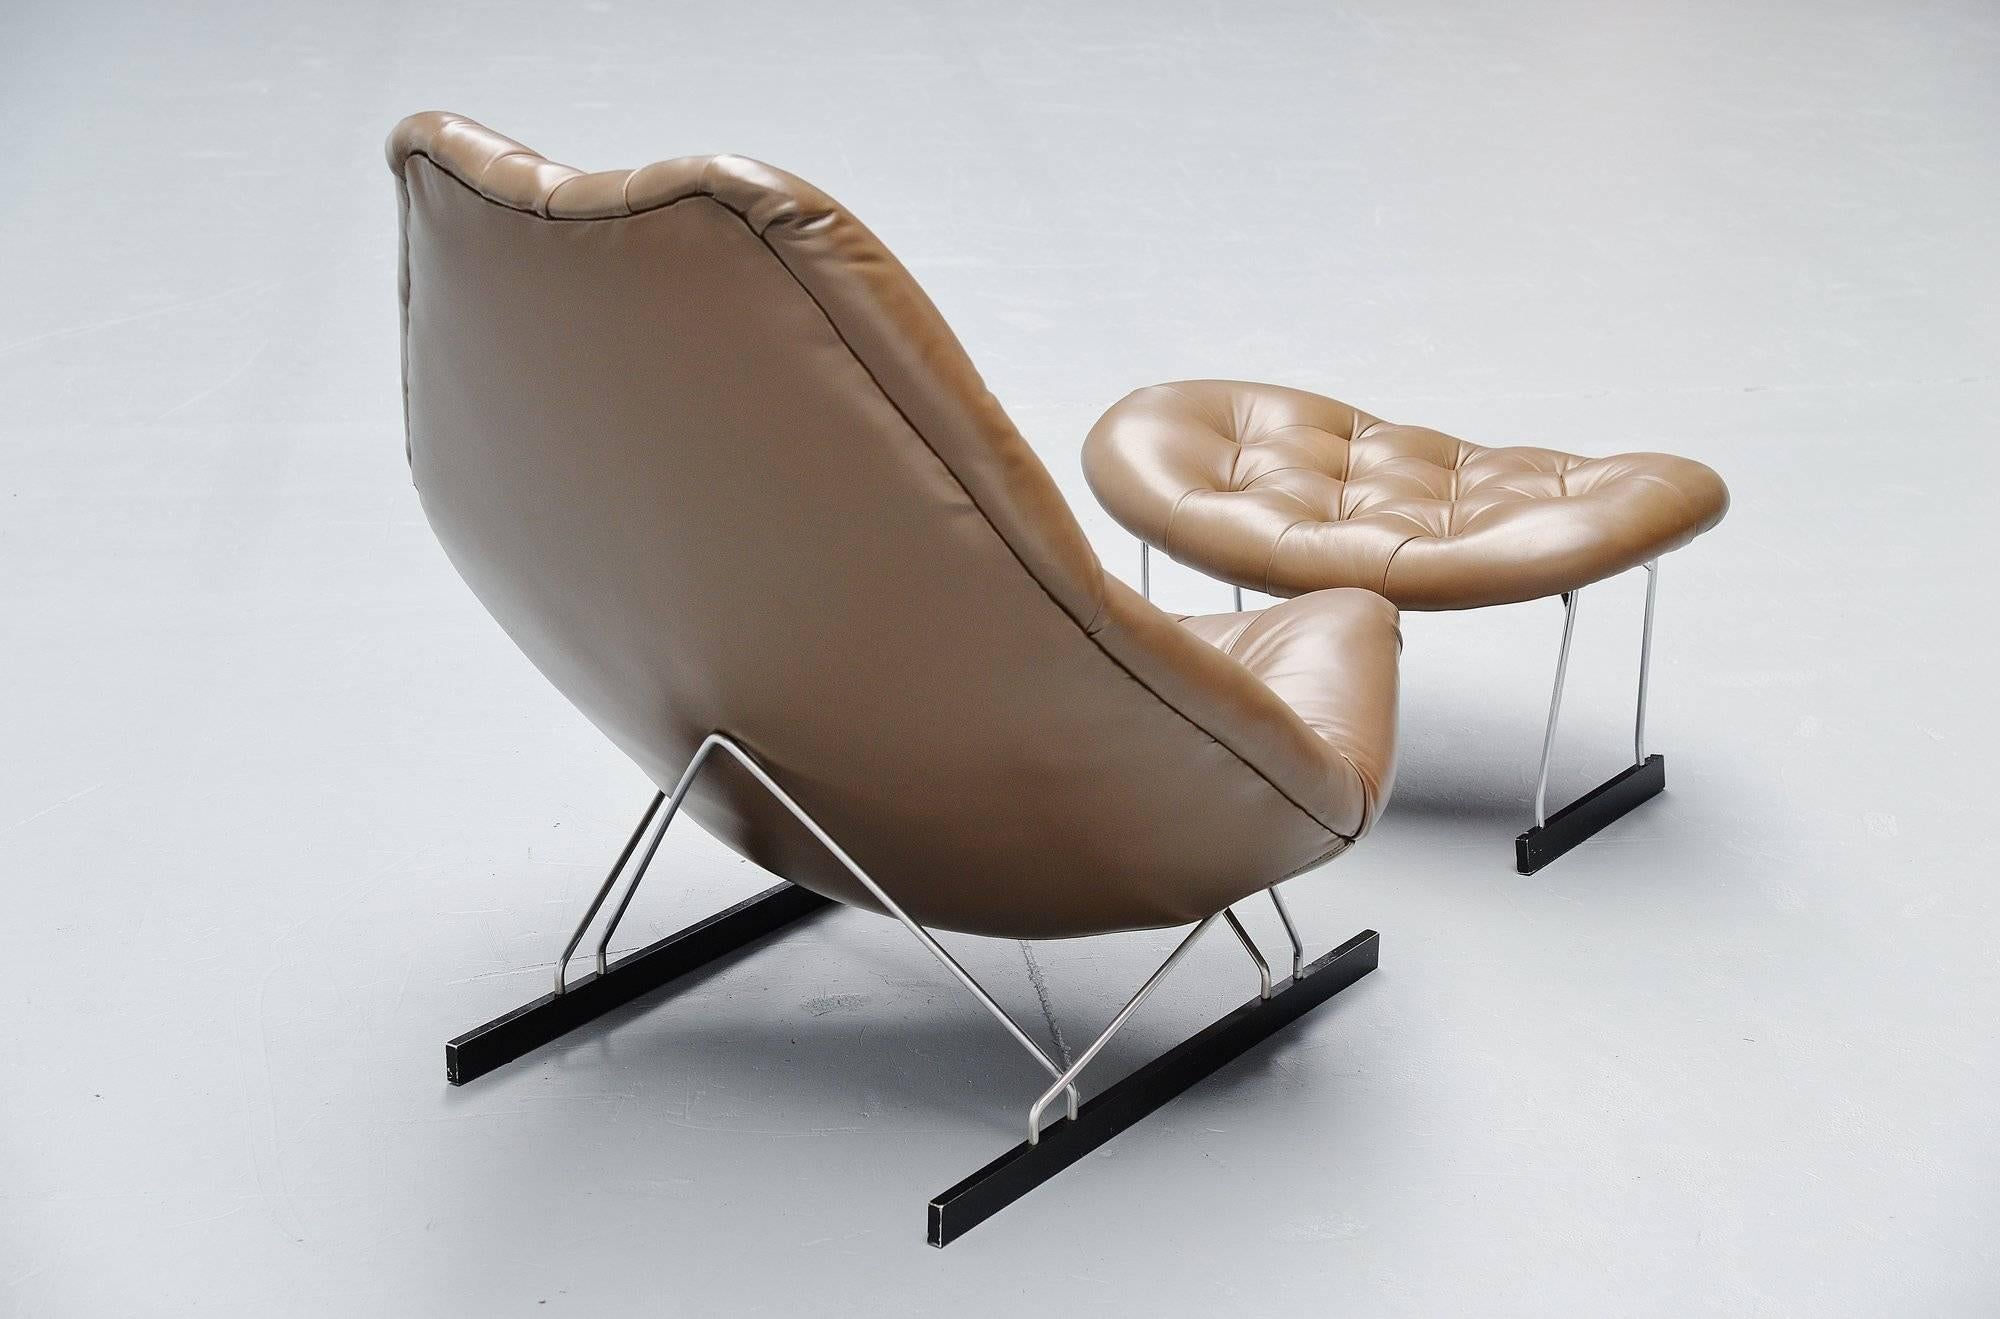 Plated Geoffrey Harcourt F592 Lounge Chair Artifort, 1966